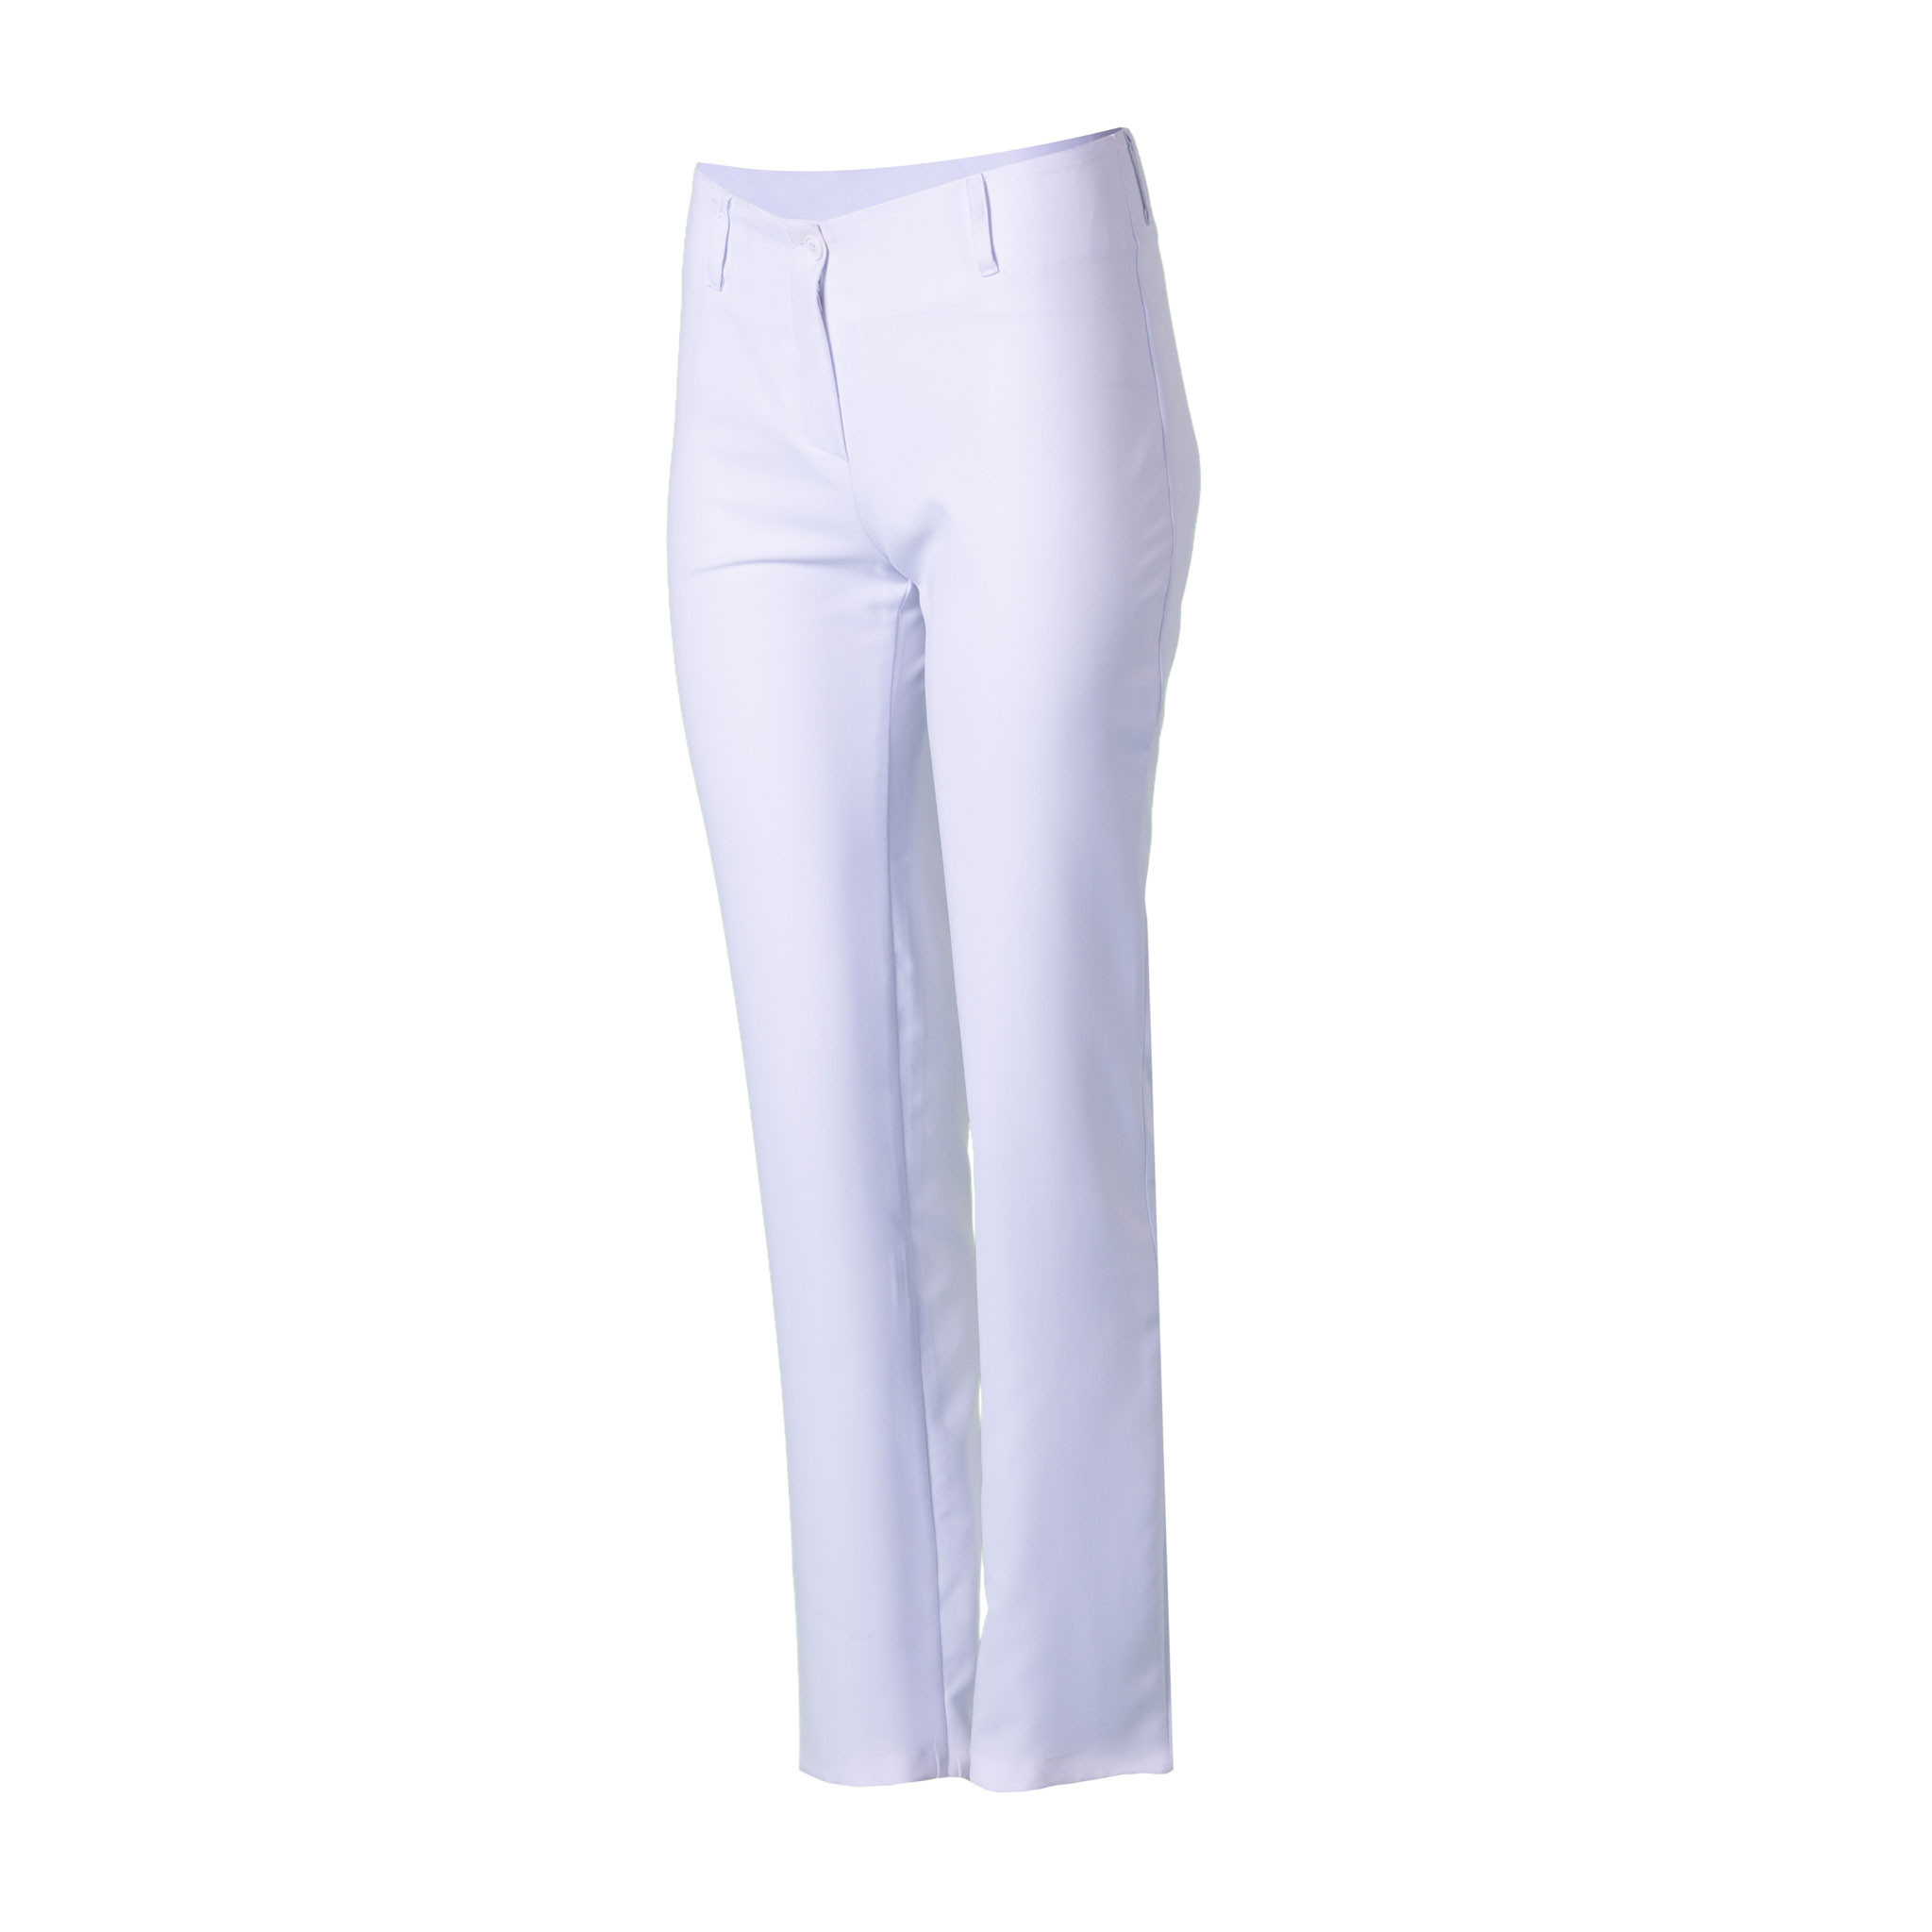 Pantalón de vestir mujer sin bolsillos GARYS 2063 Elastik, compra online